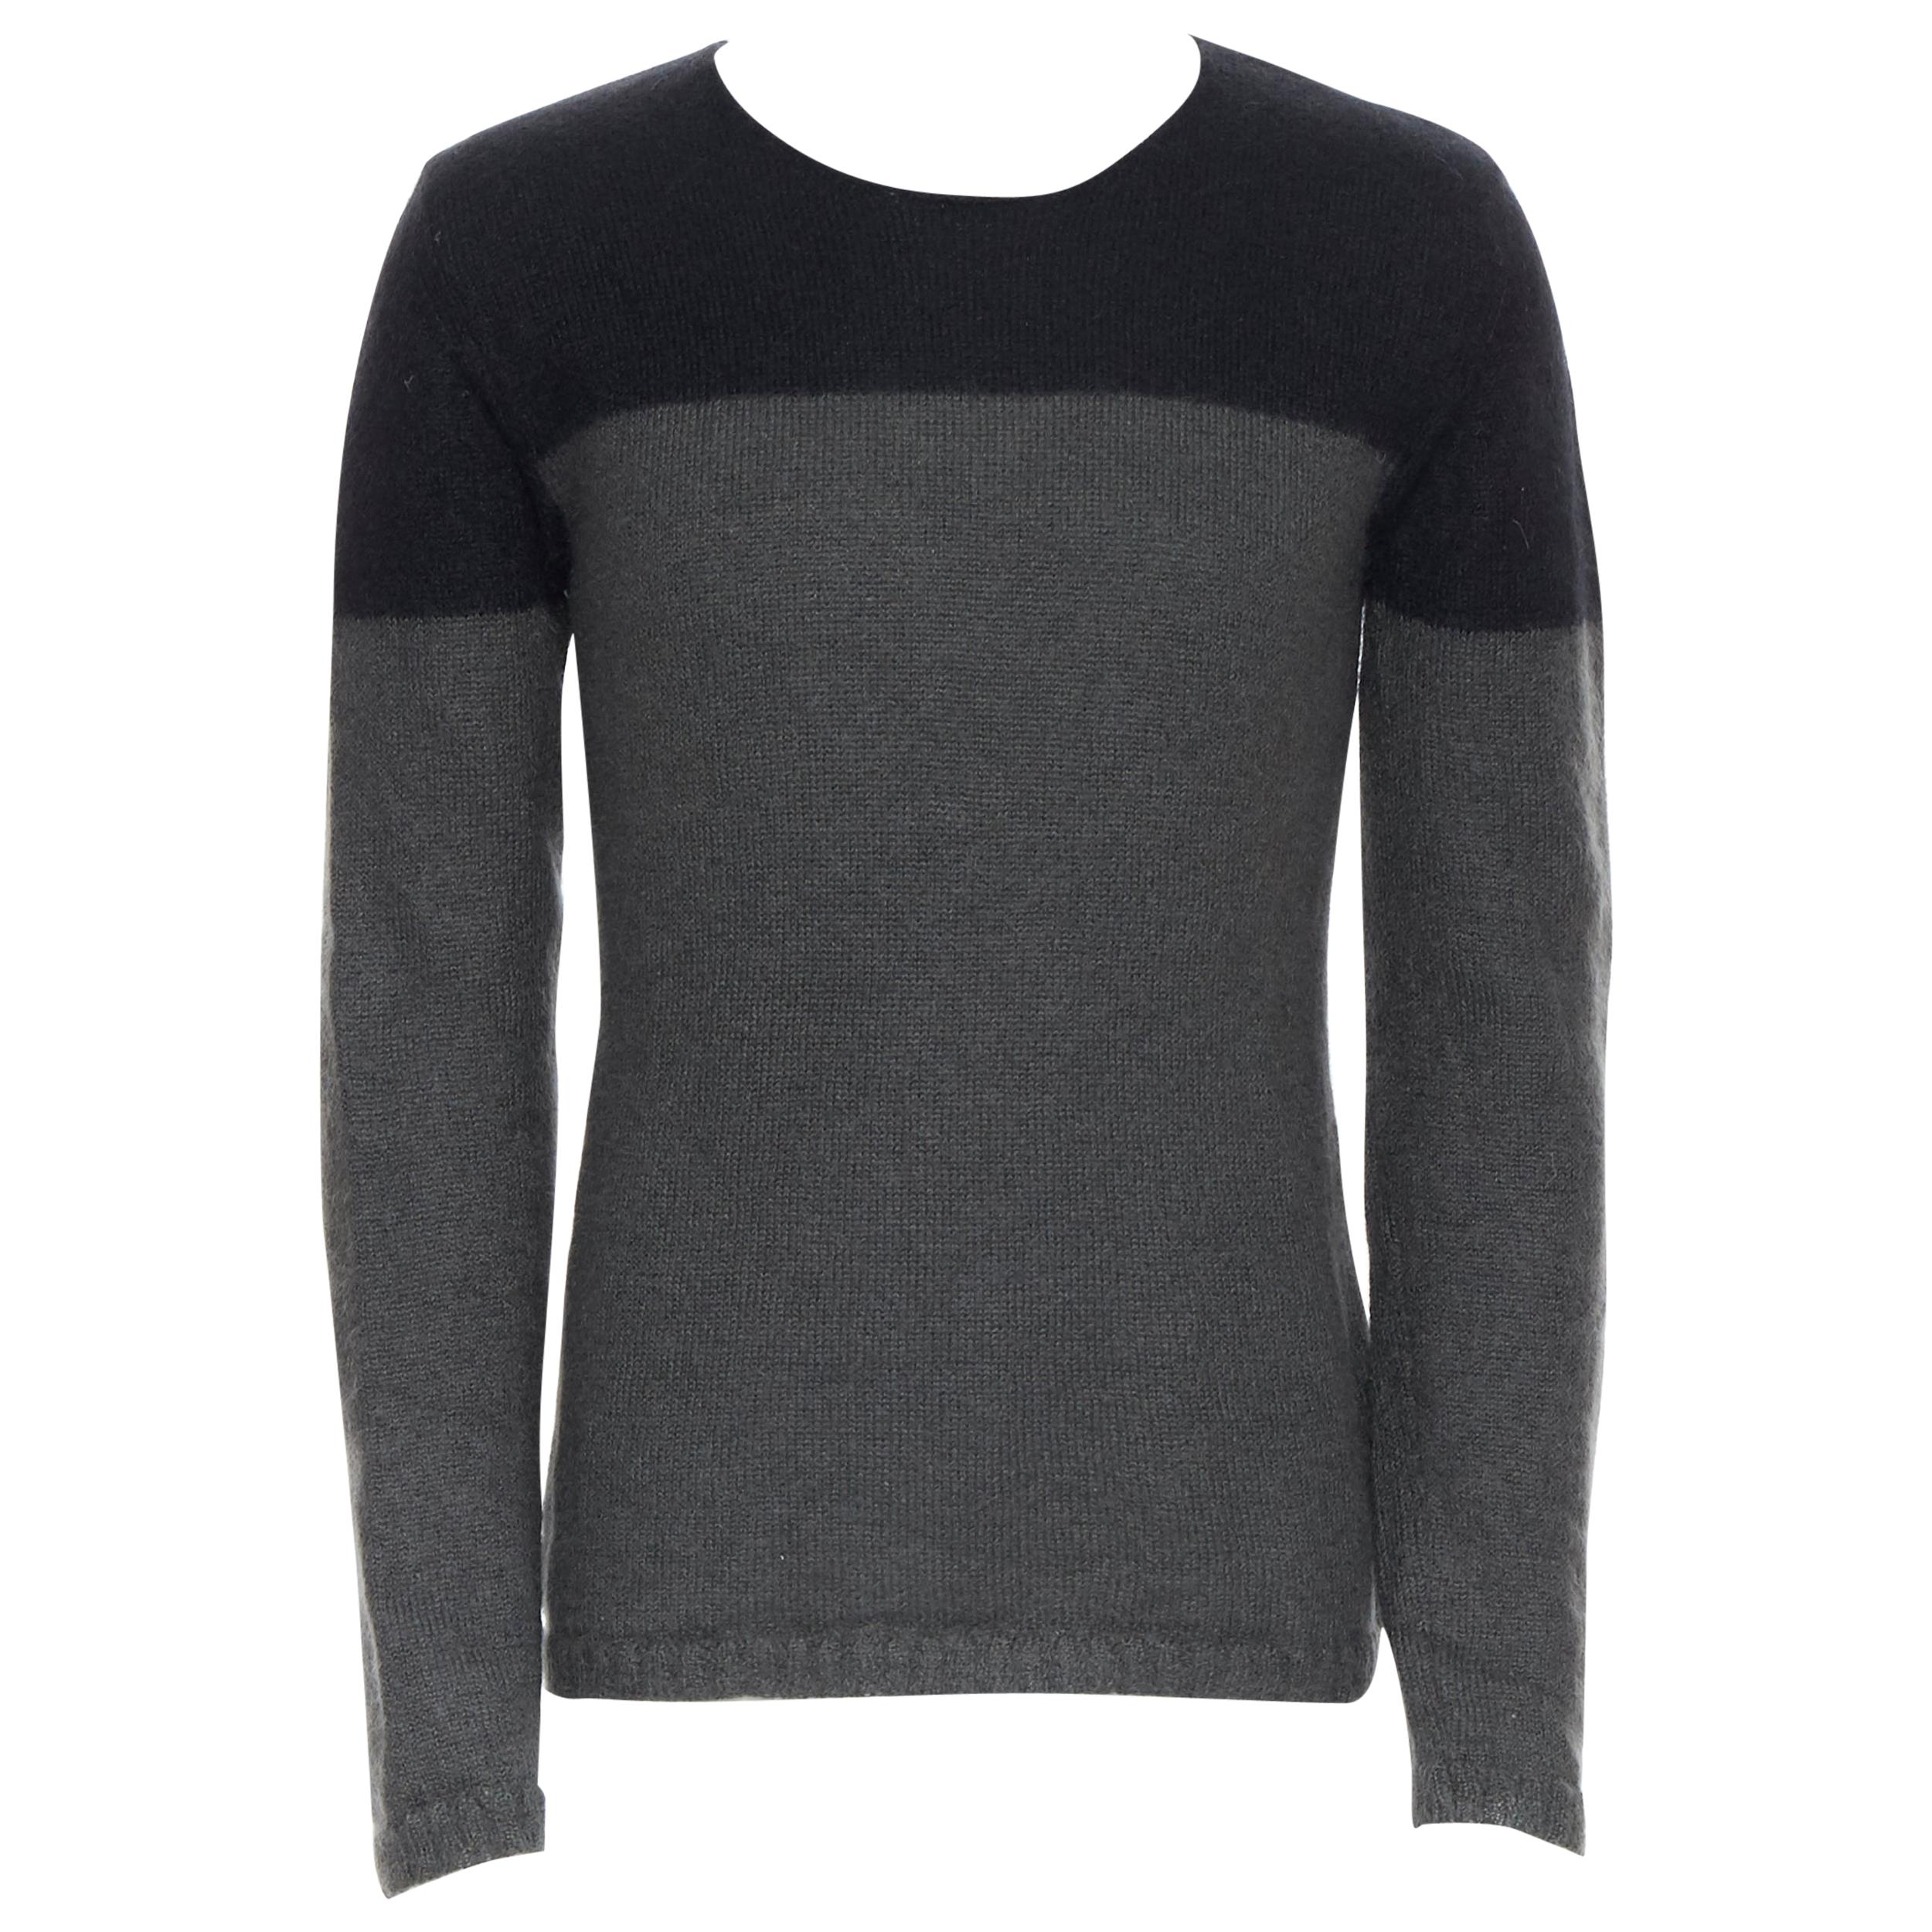 ANN DEMEULEMEESTER mohair wool black grey colorblocked sweater S